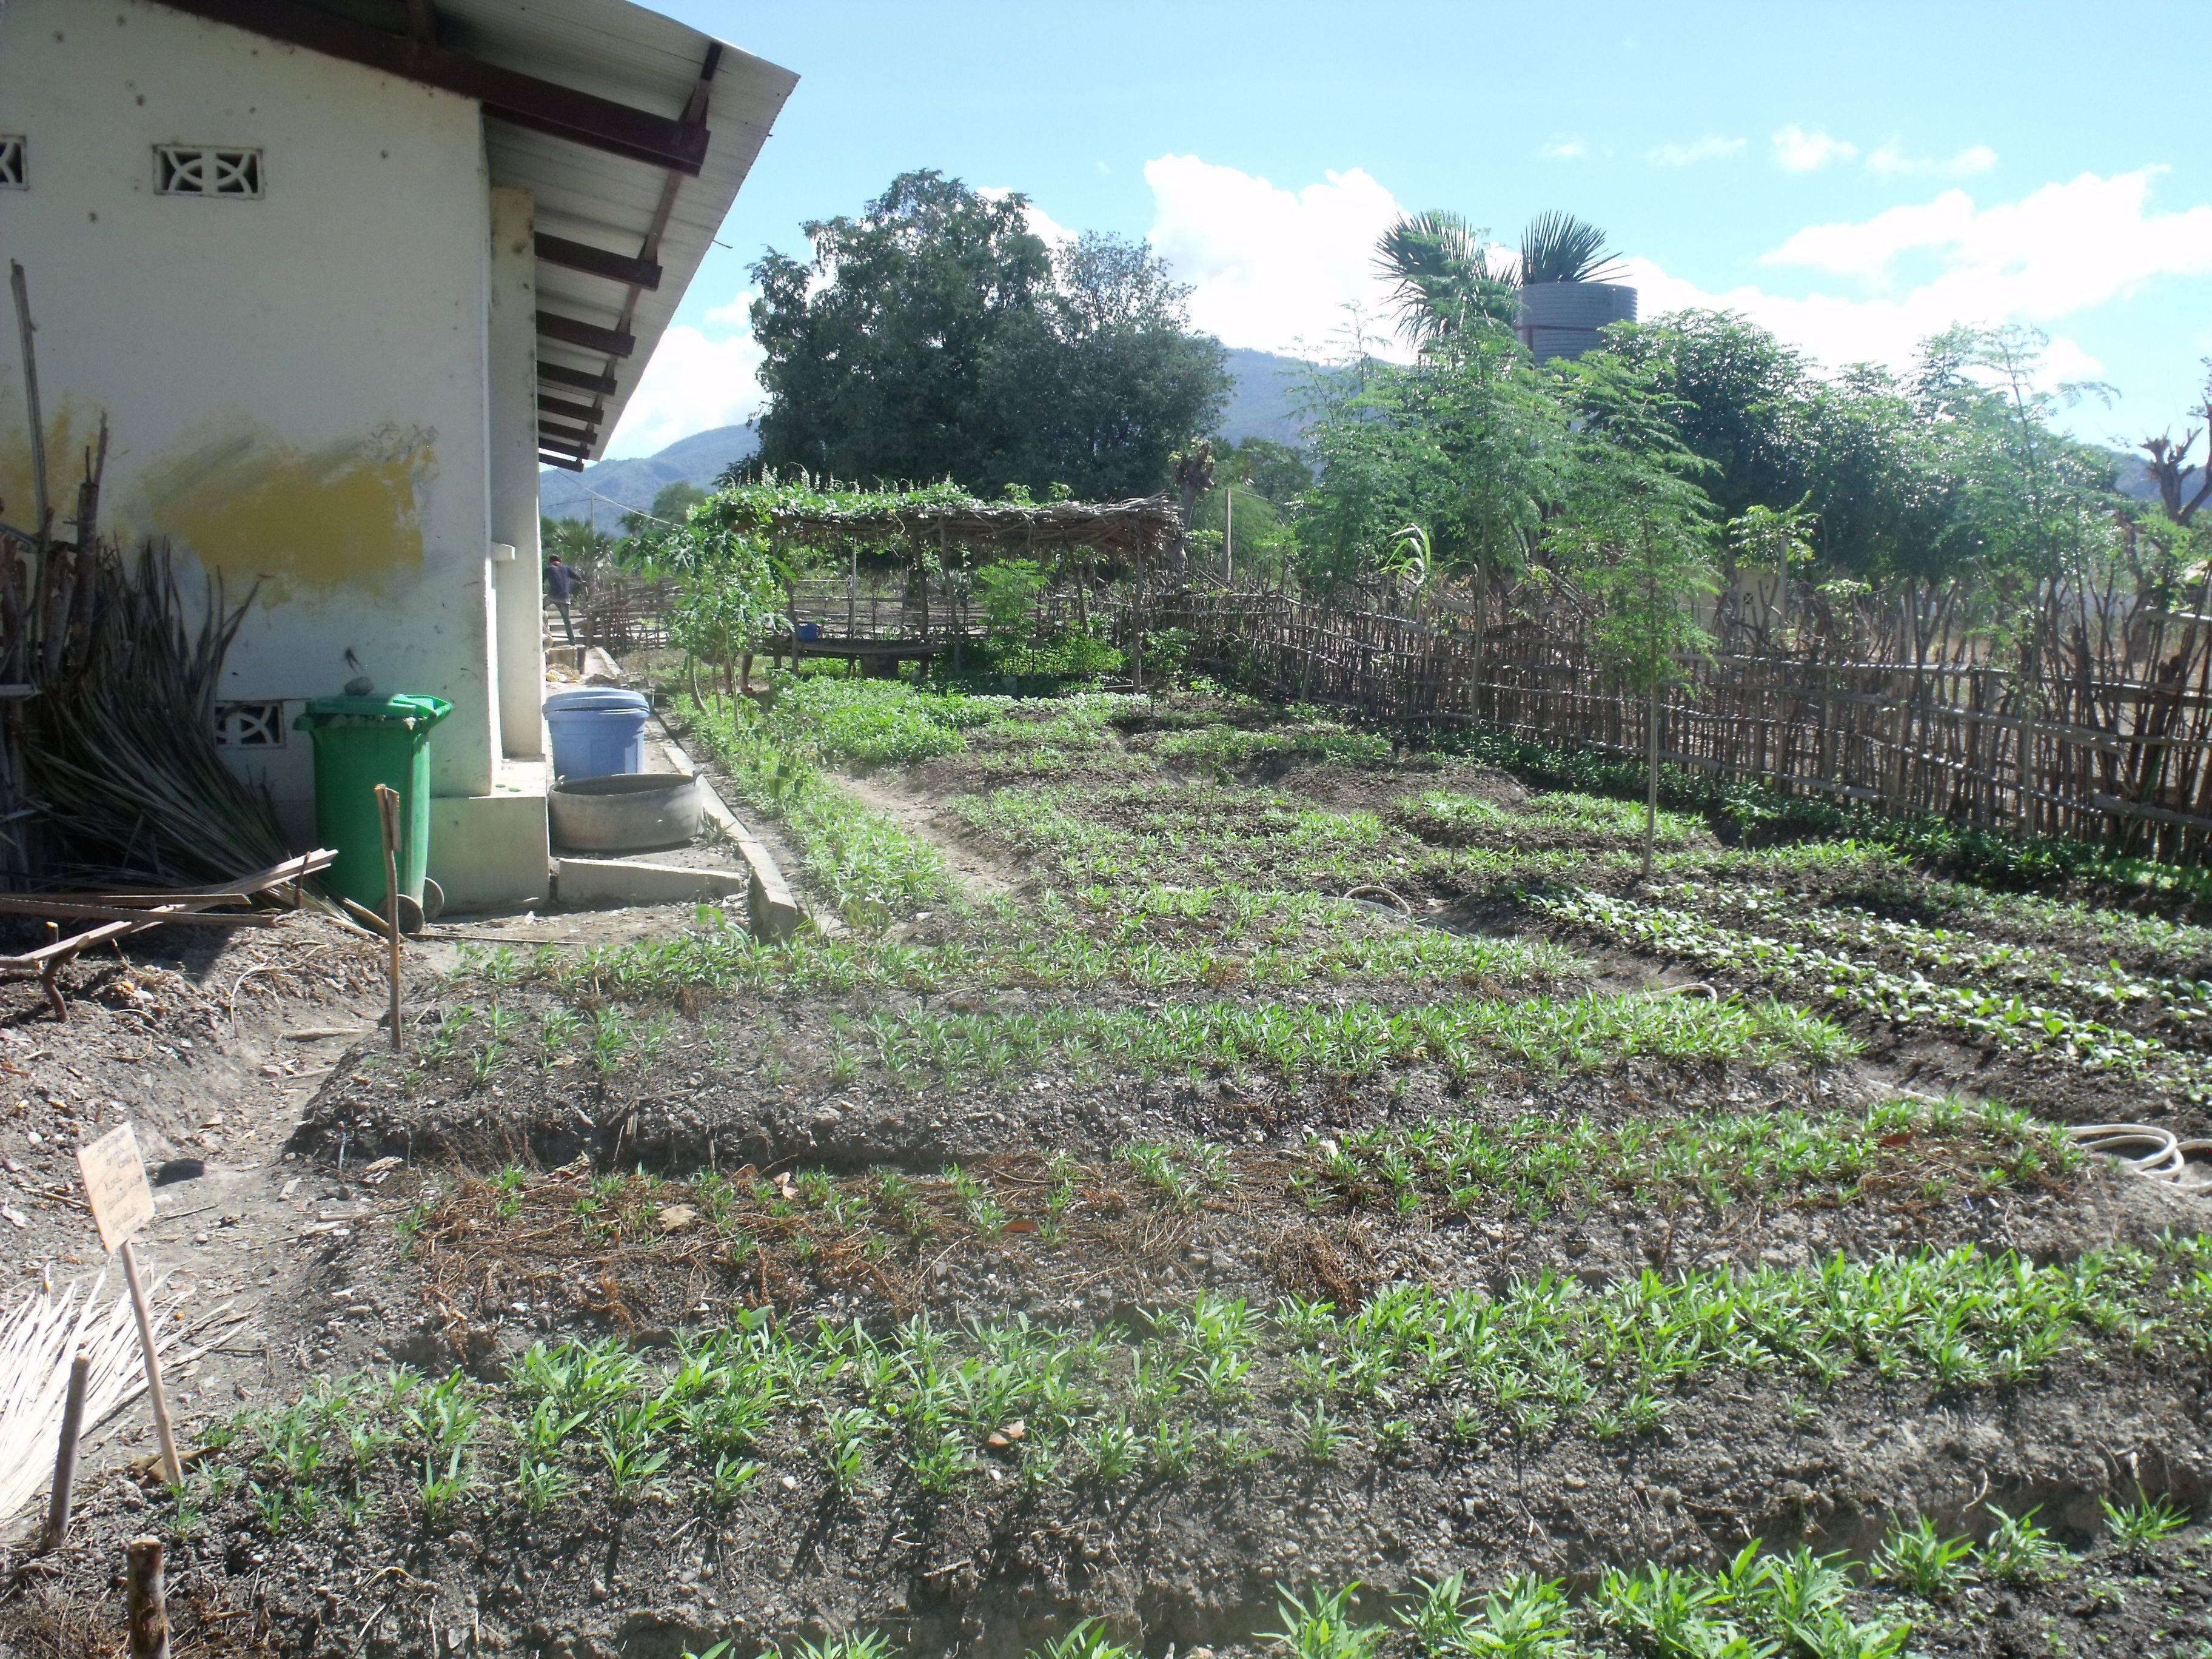 The Manatuto School Garden - a 'blooming success'. Photo: Tim Holt